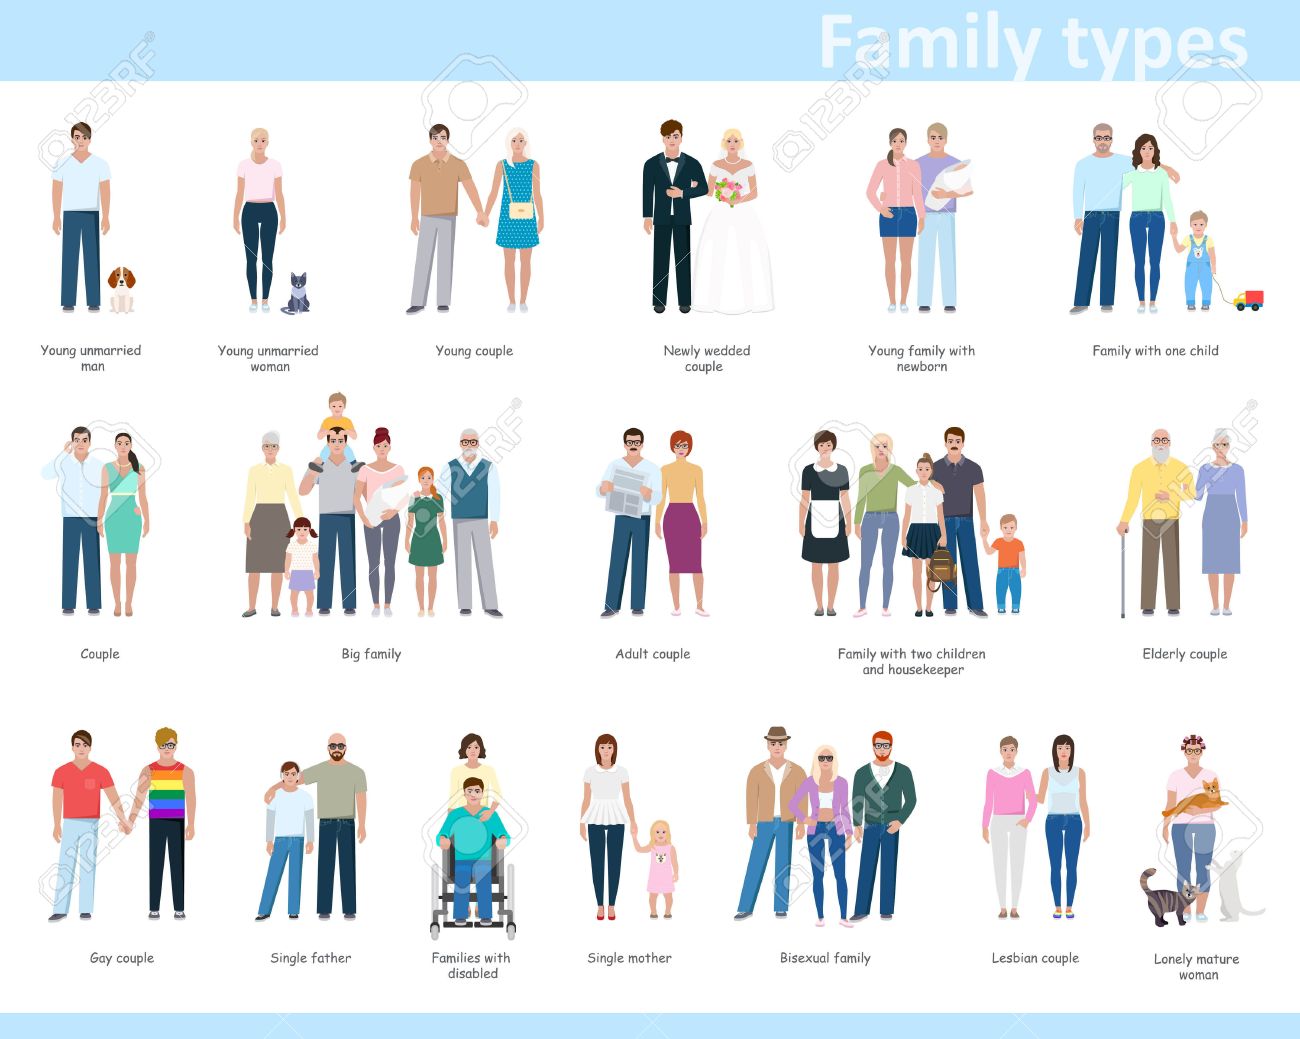 families.jpg